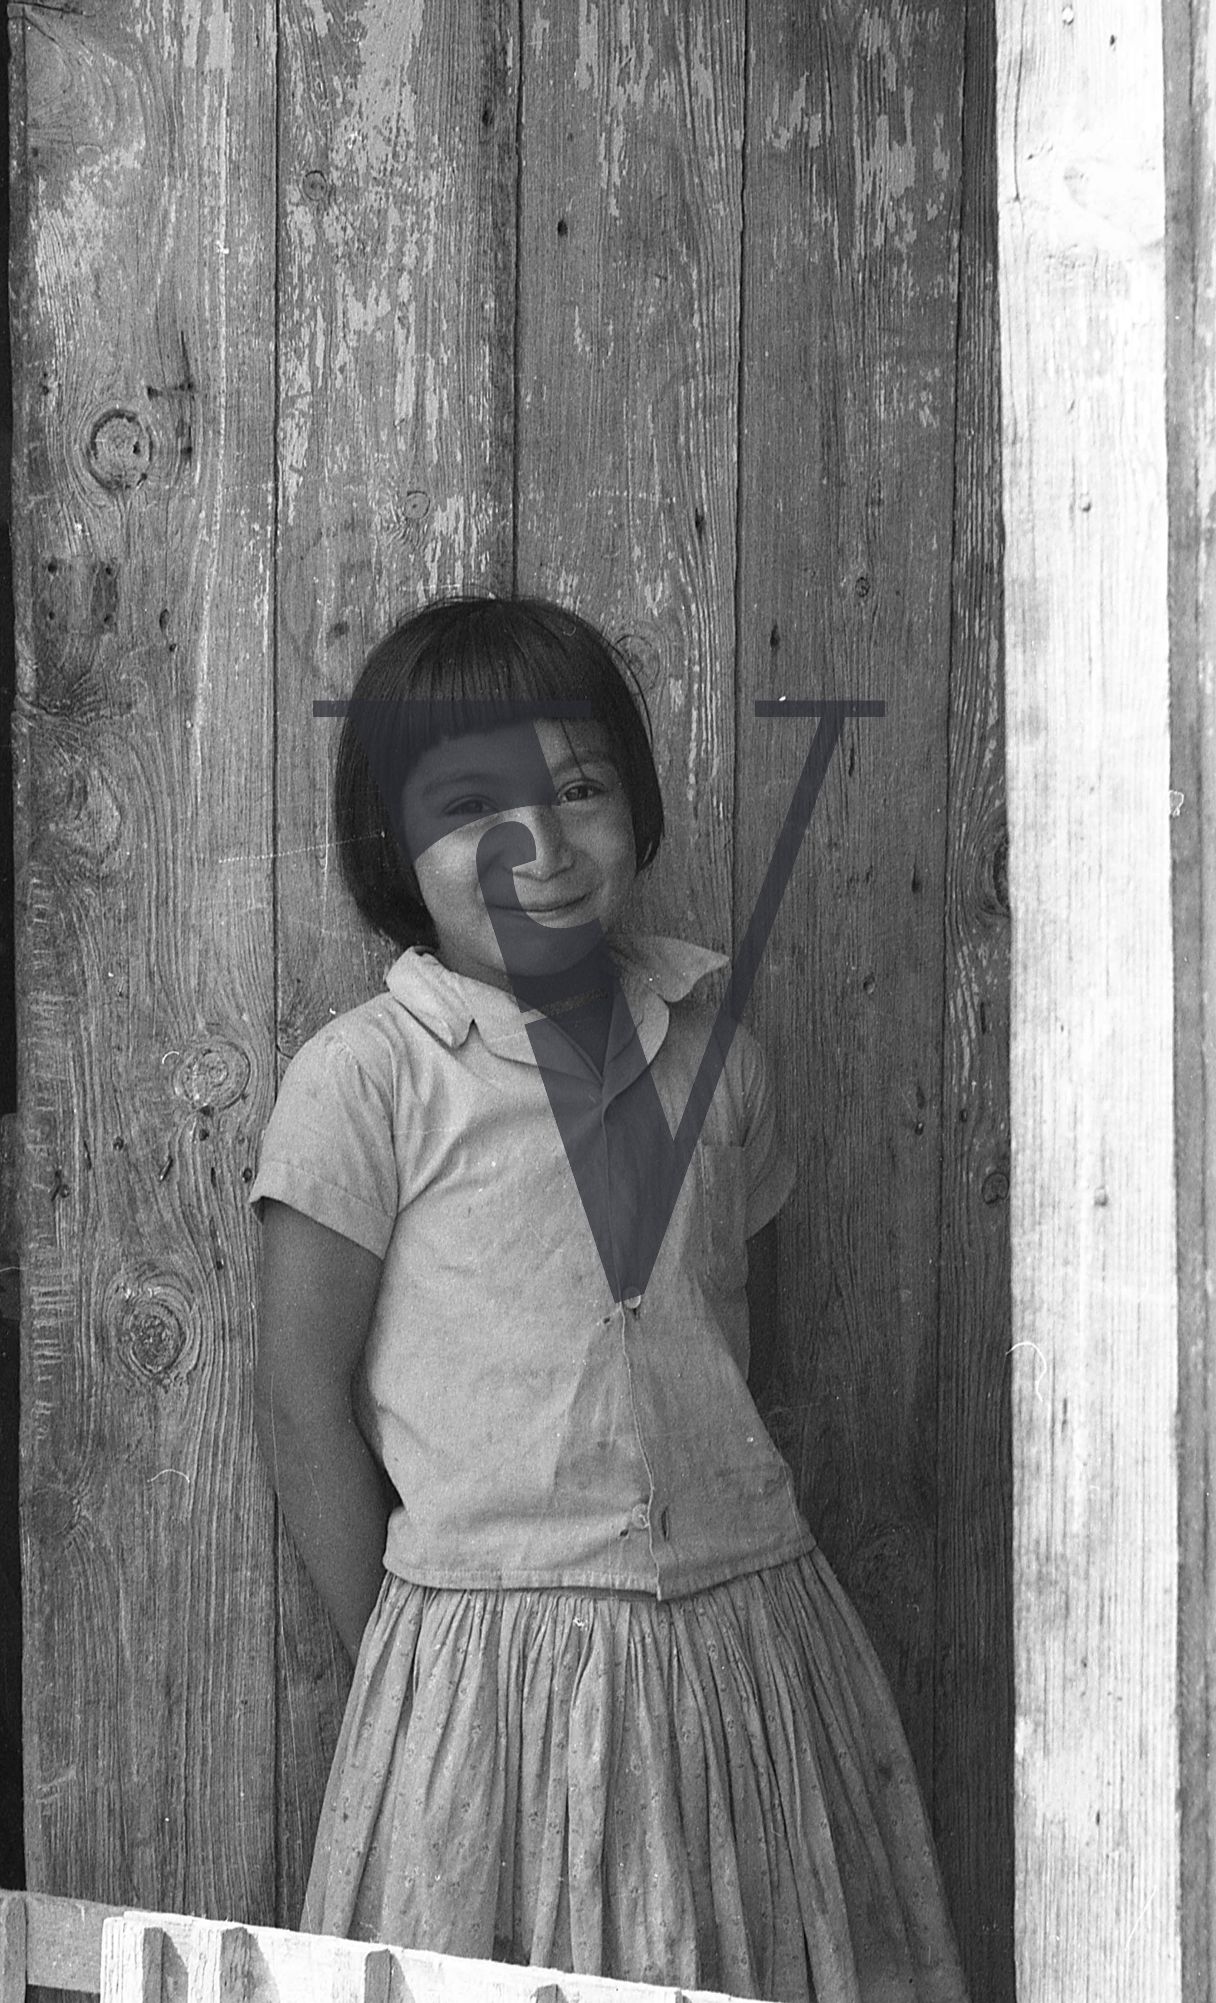 Mexico, Little girl, smiling, portrait.